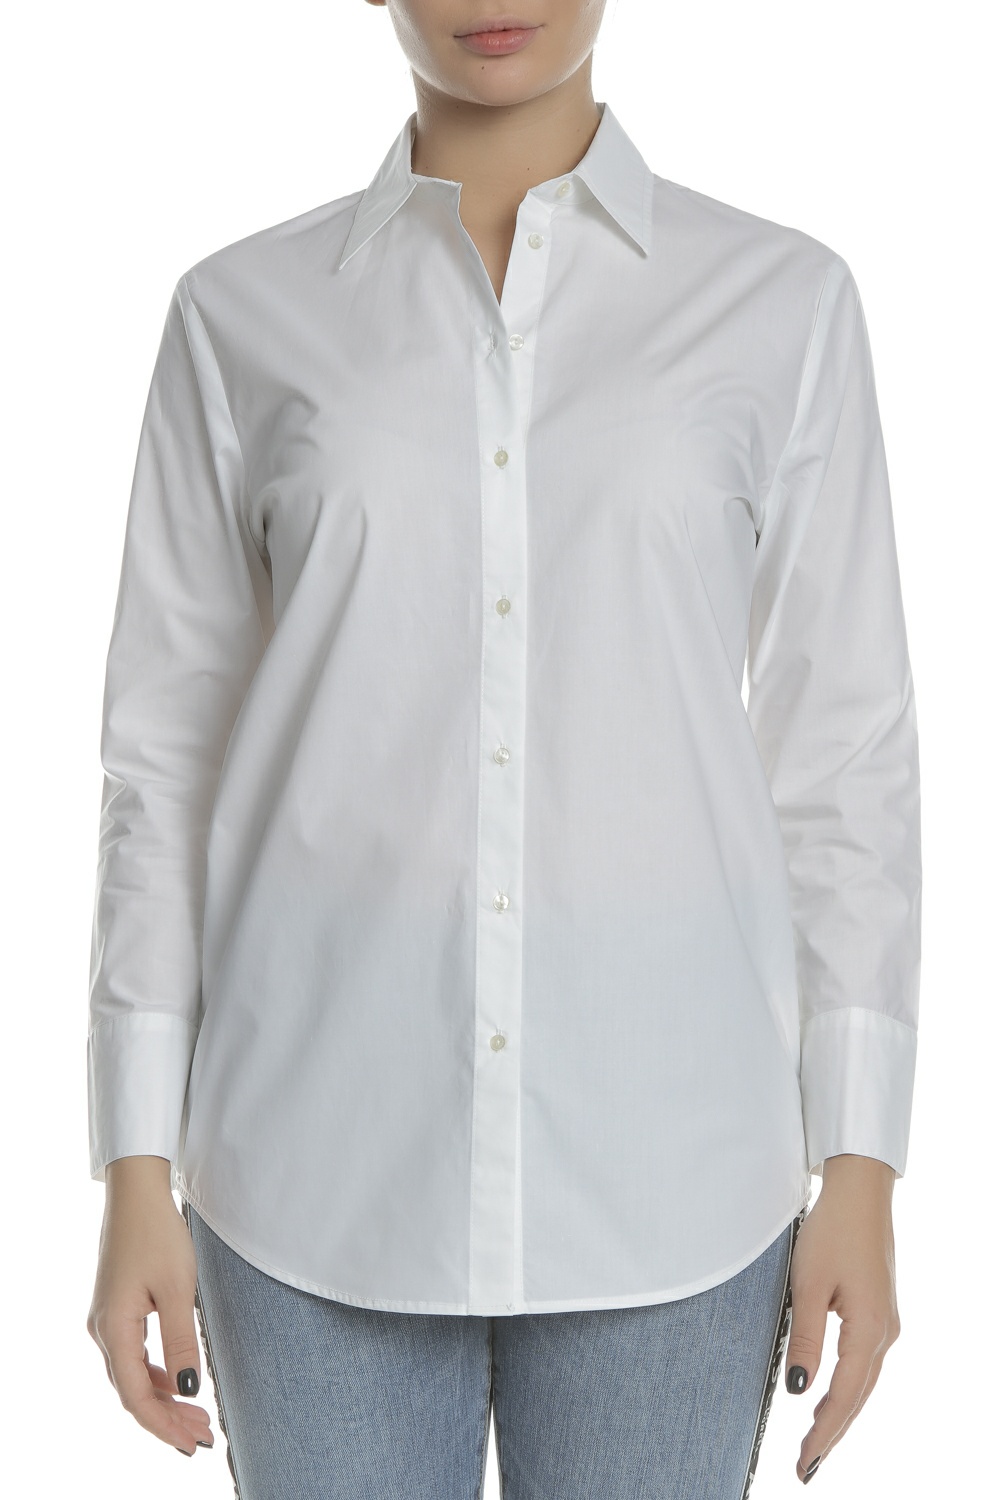 SCOTCH & SODA SCOTCH & SODA - Γυναικείο μακρυμάνικο πουκάμισο SCOTCH & SODA BOYFRIEND FIT λευκό